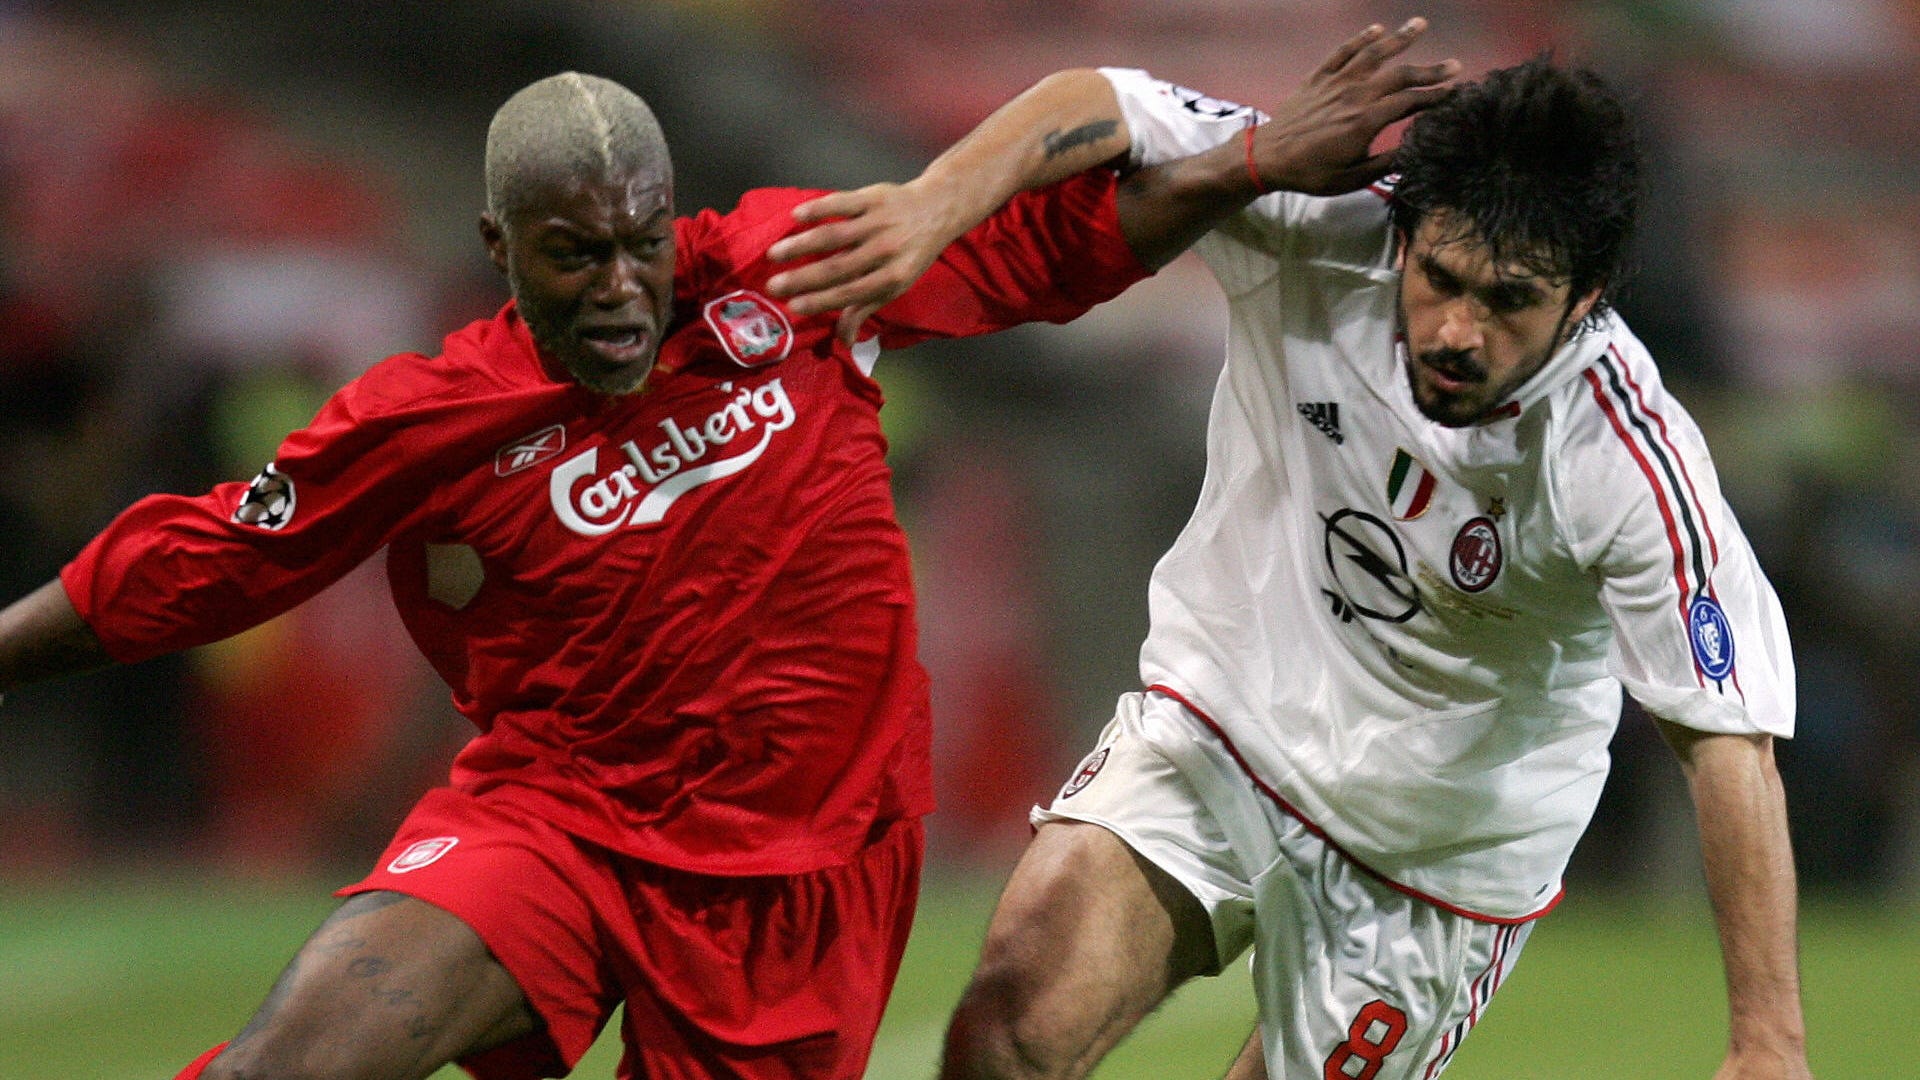 Gattuso AC Milan Liverpool 2005